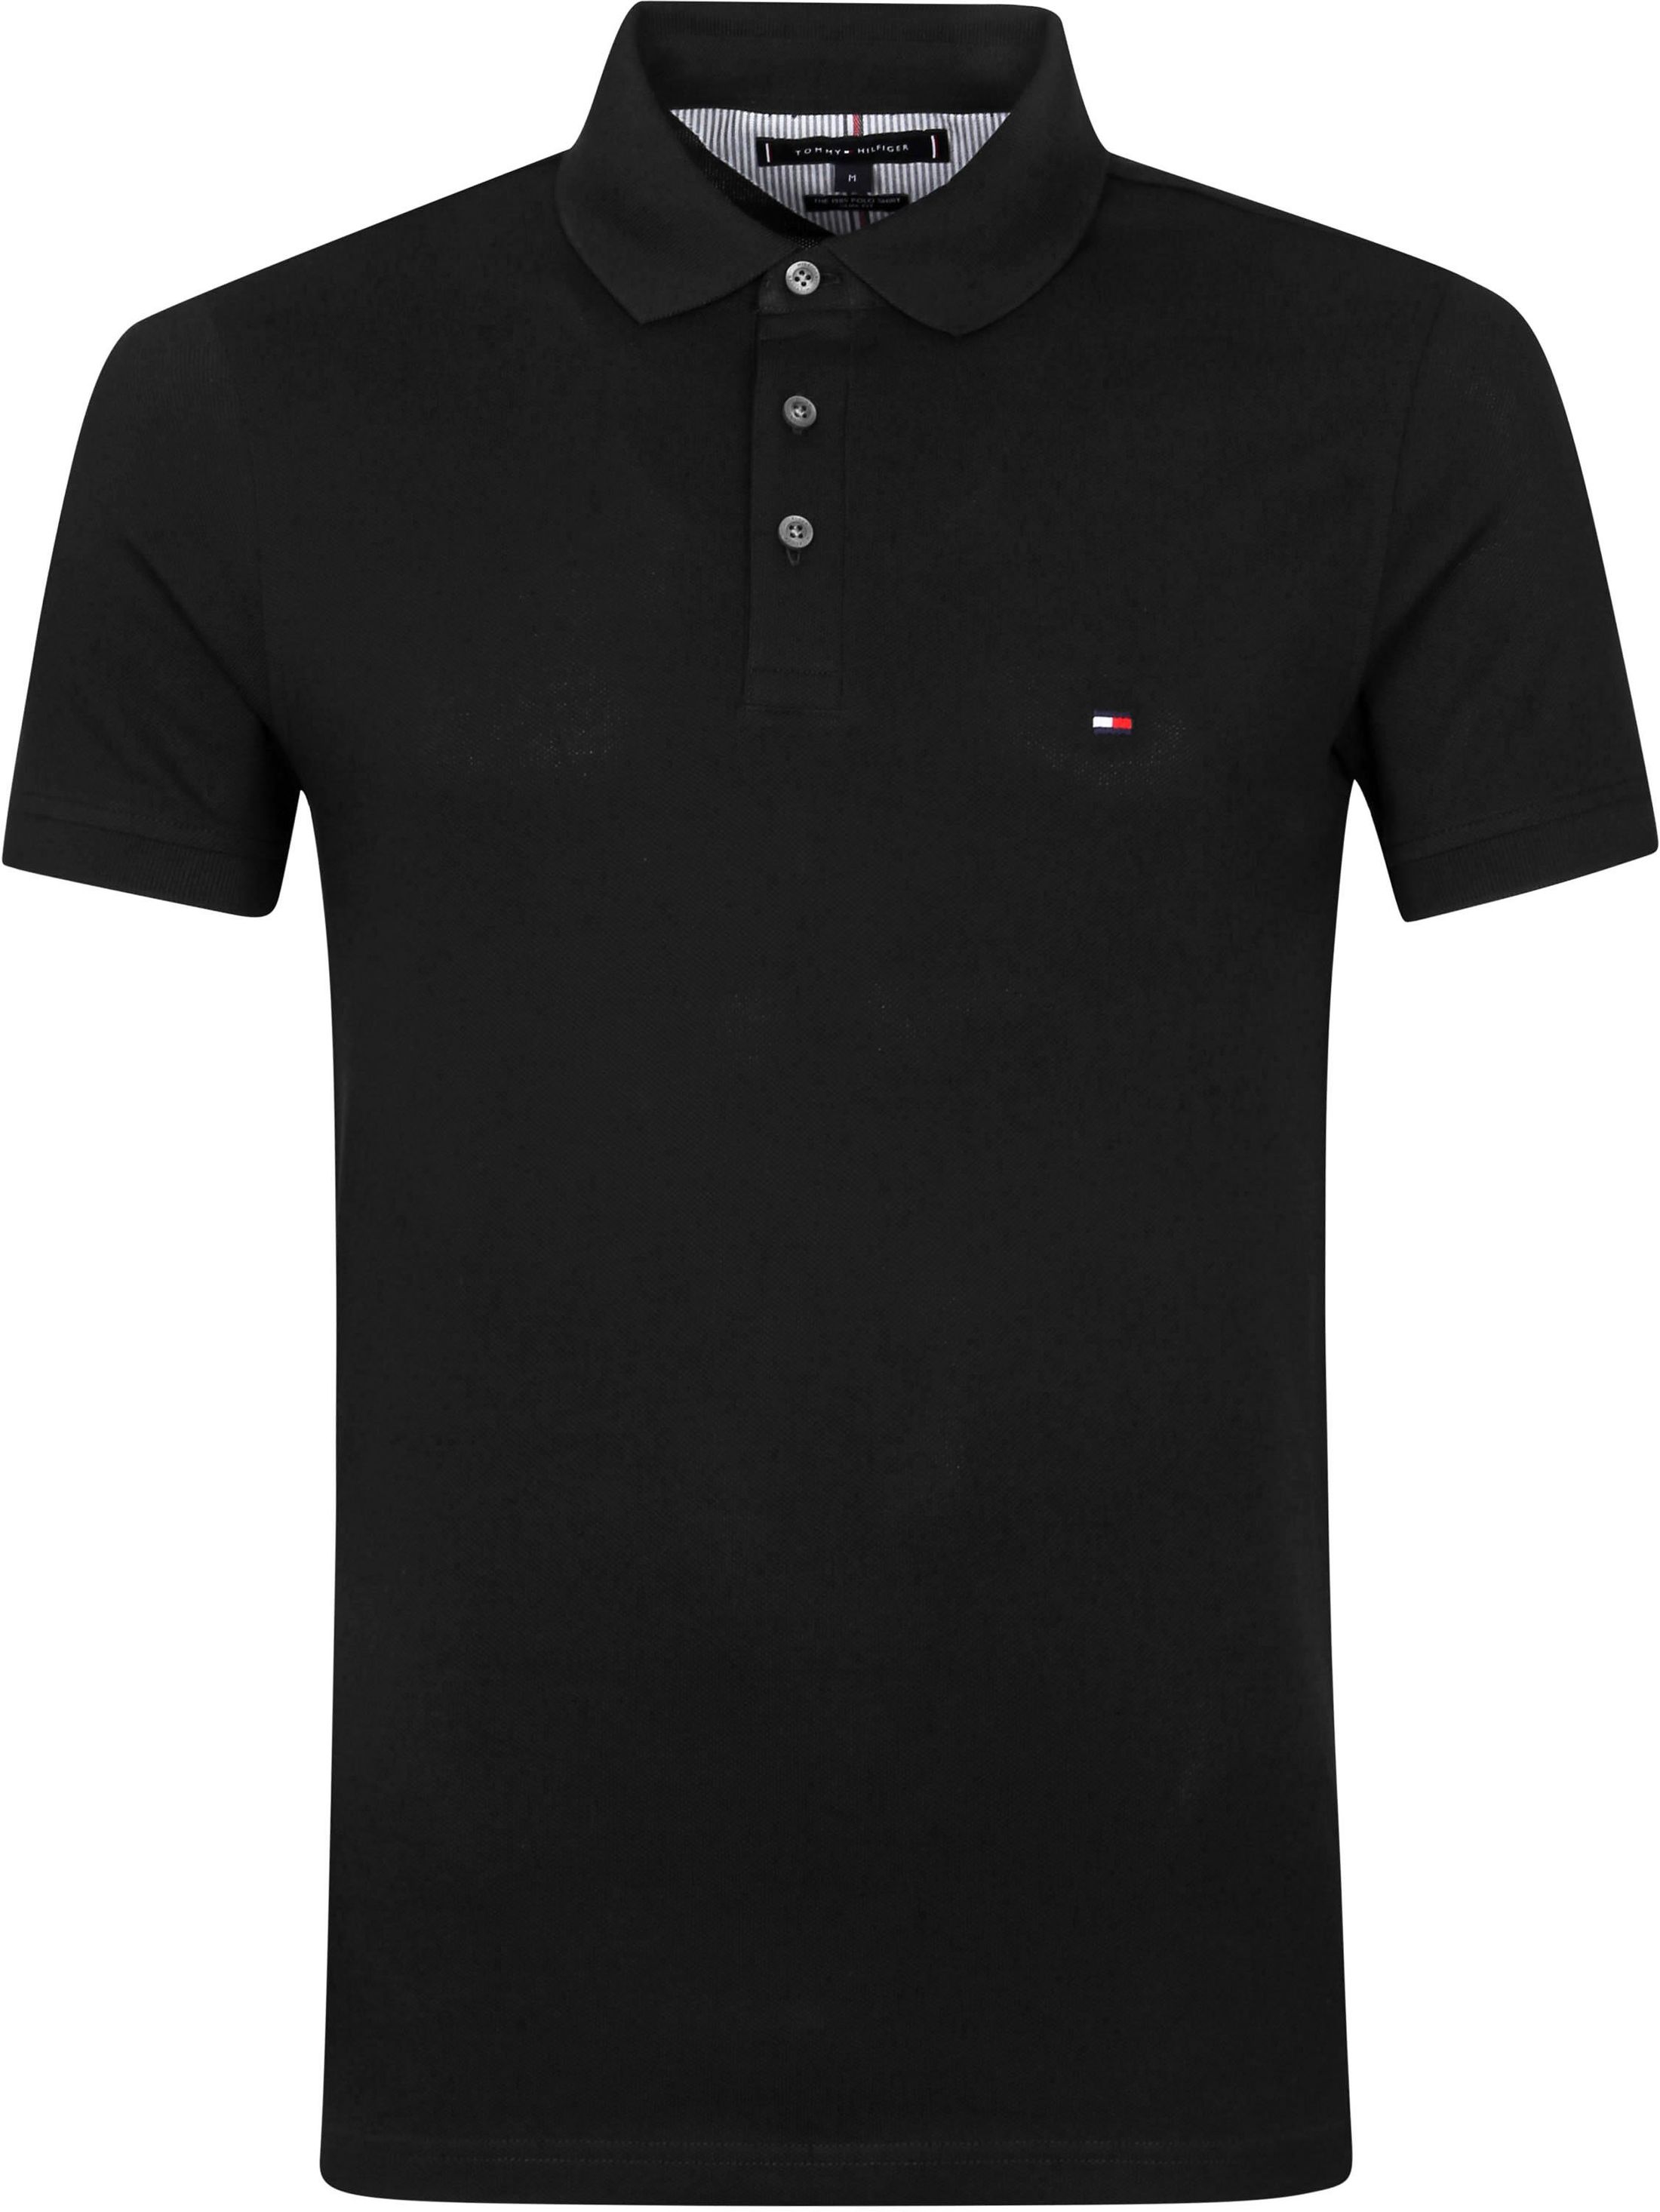 Tommy Hilfiger 1985 Polo Shirt Black size L